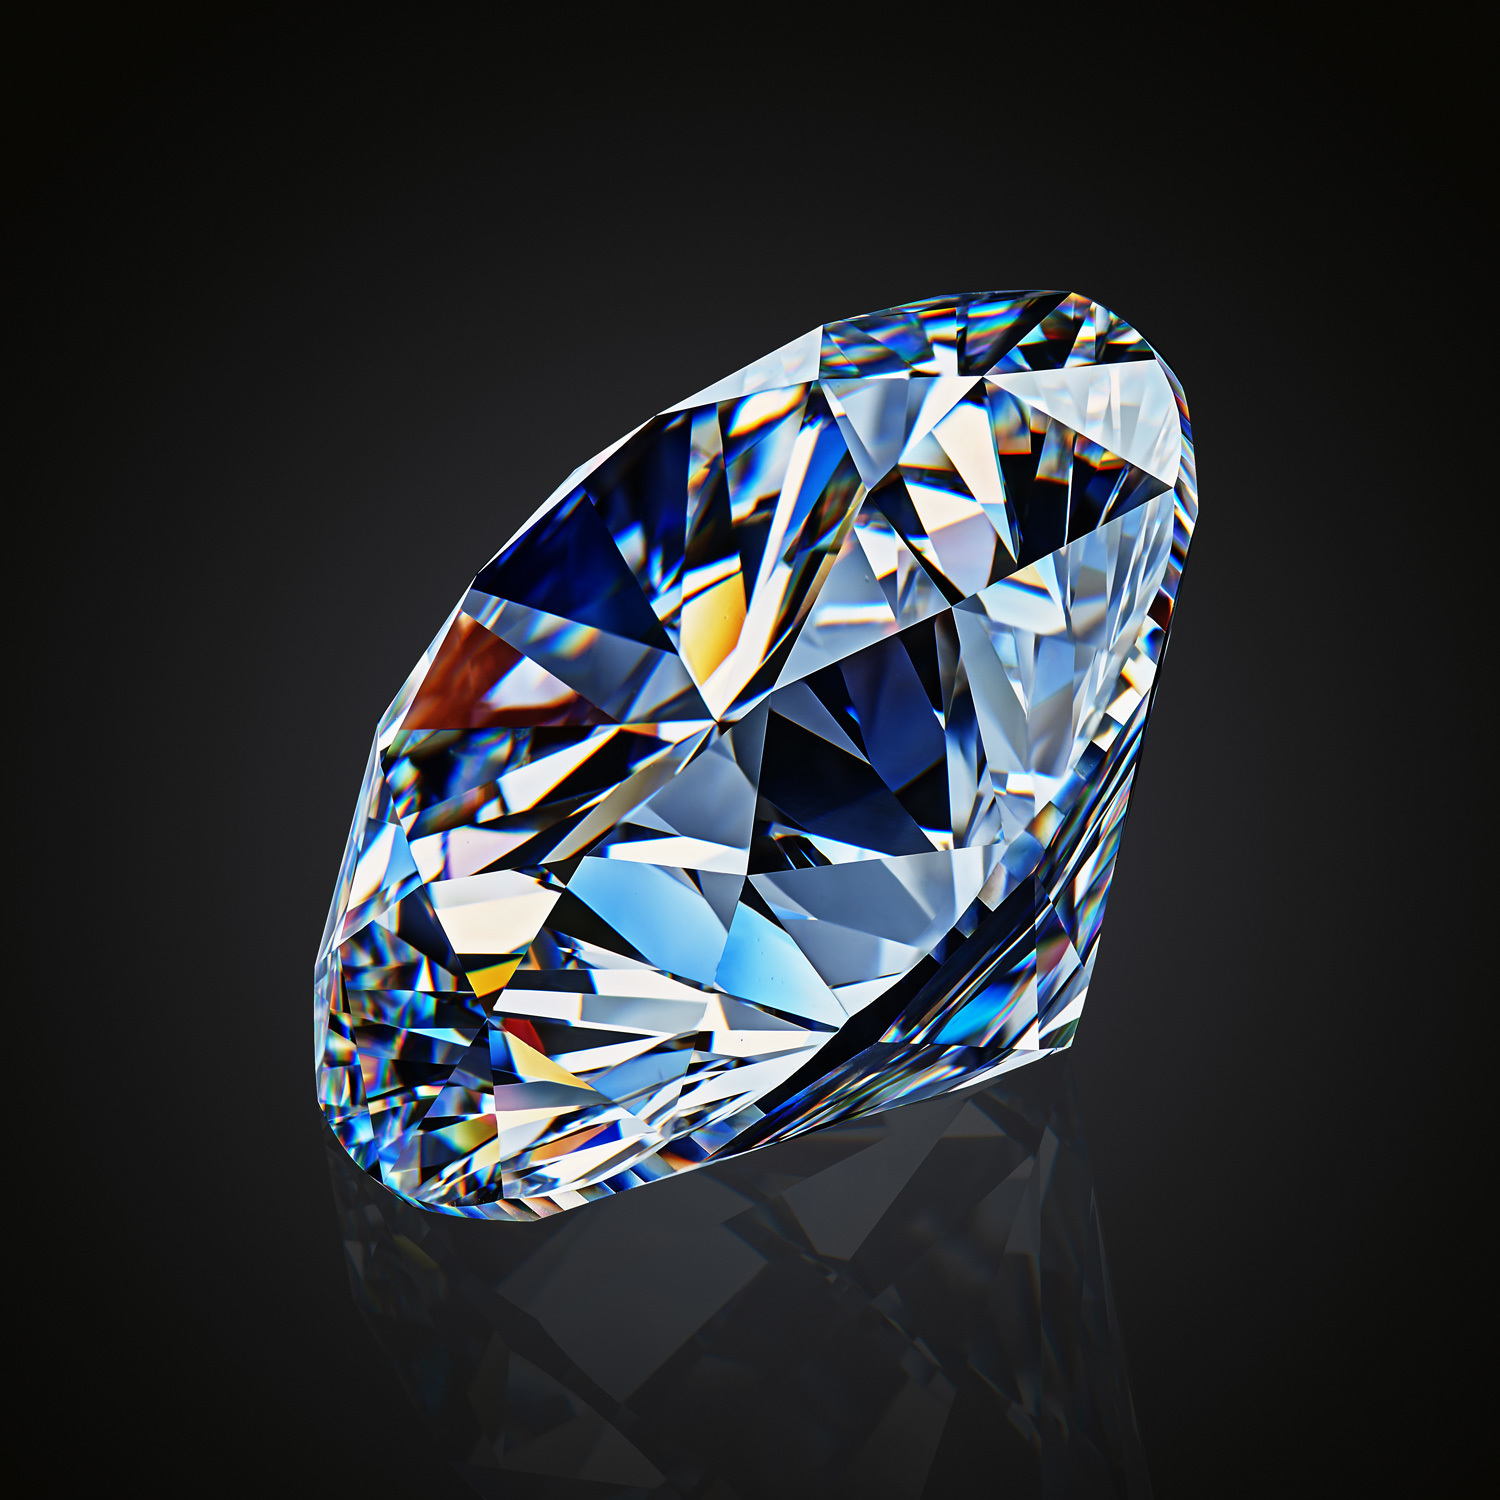 С цветными бриллиантами first class diamonds. Алмаз (Диамант, алмазная голова). Даймонд (диамонд) / Diamond.